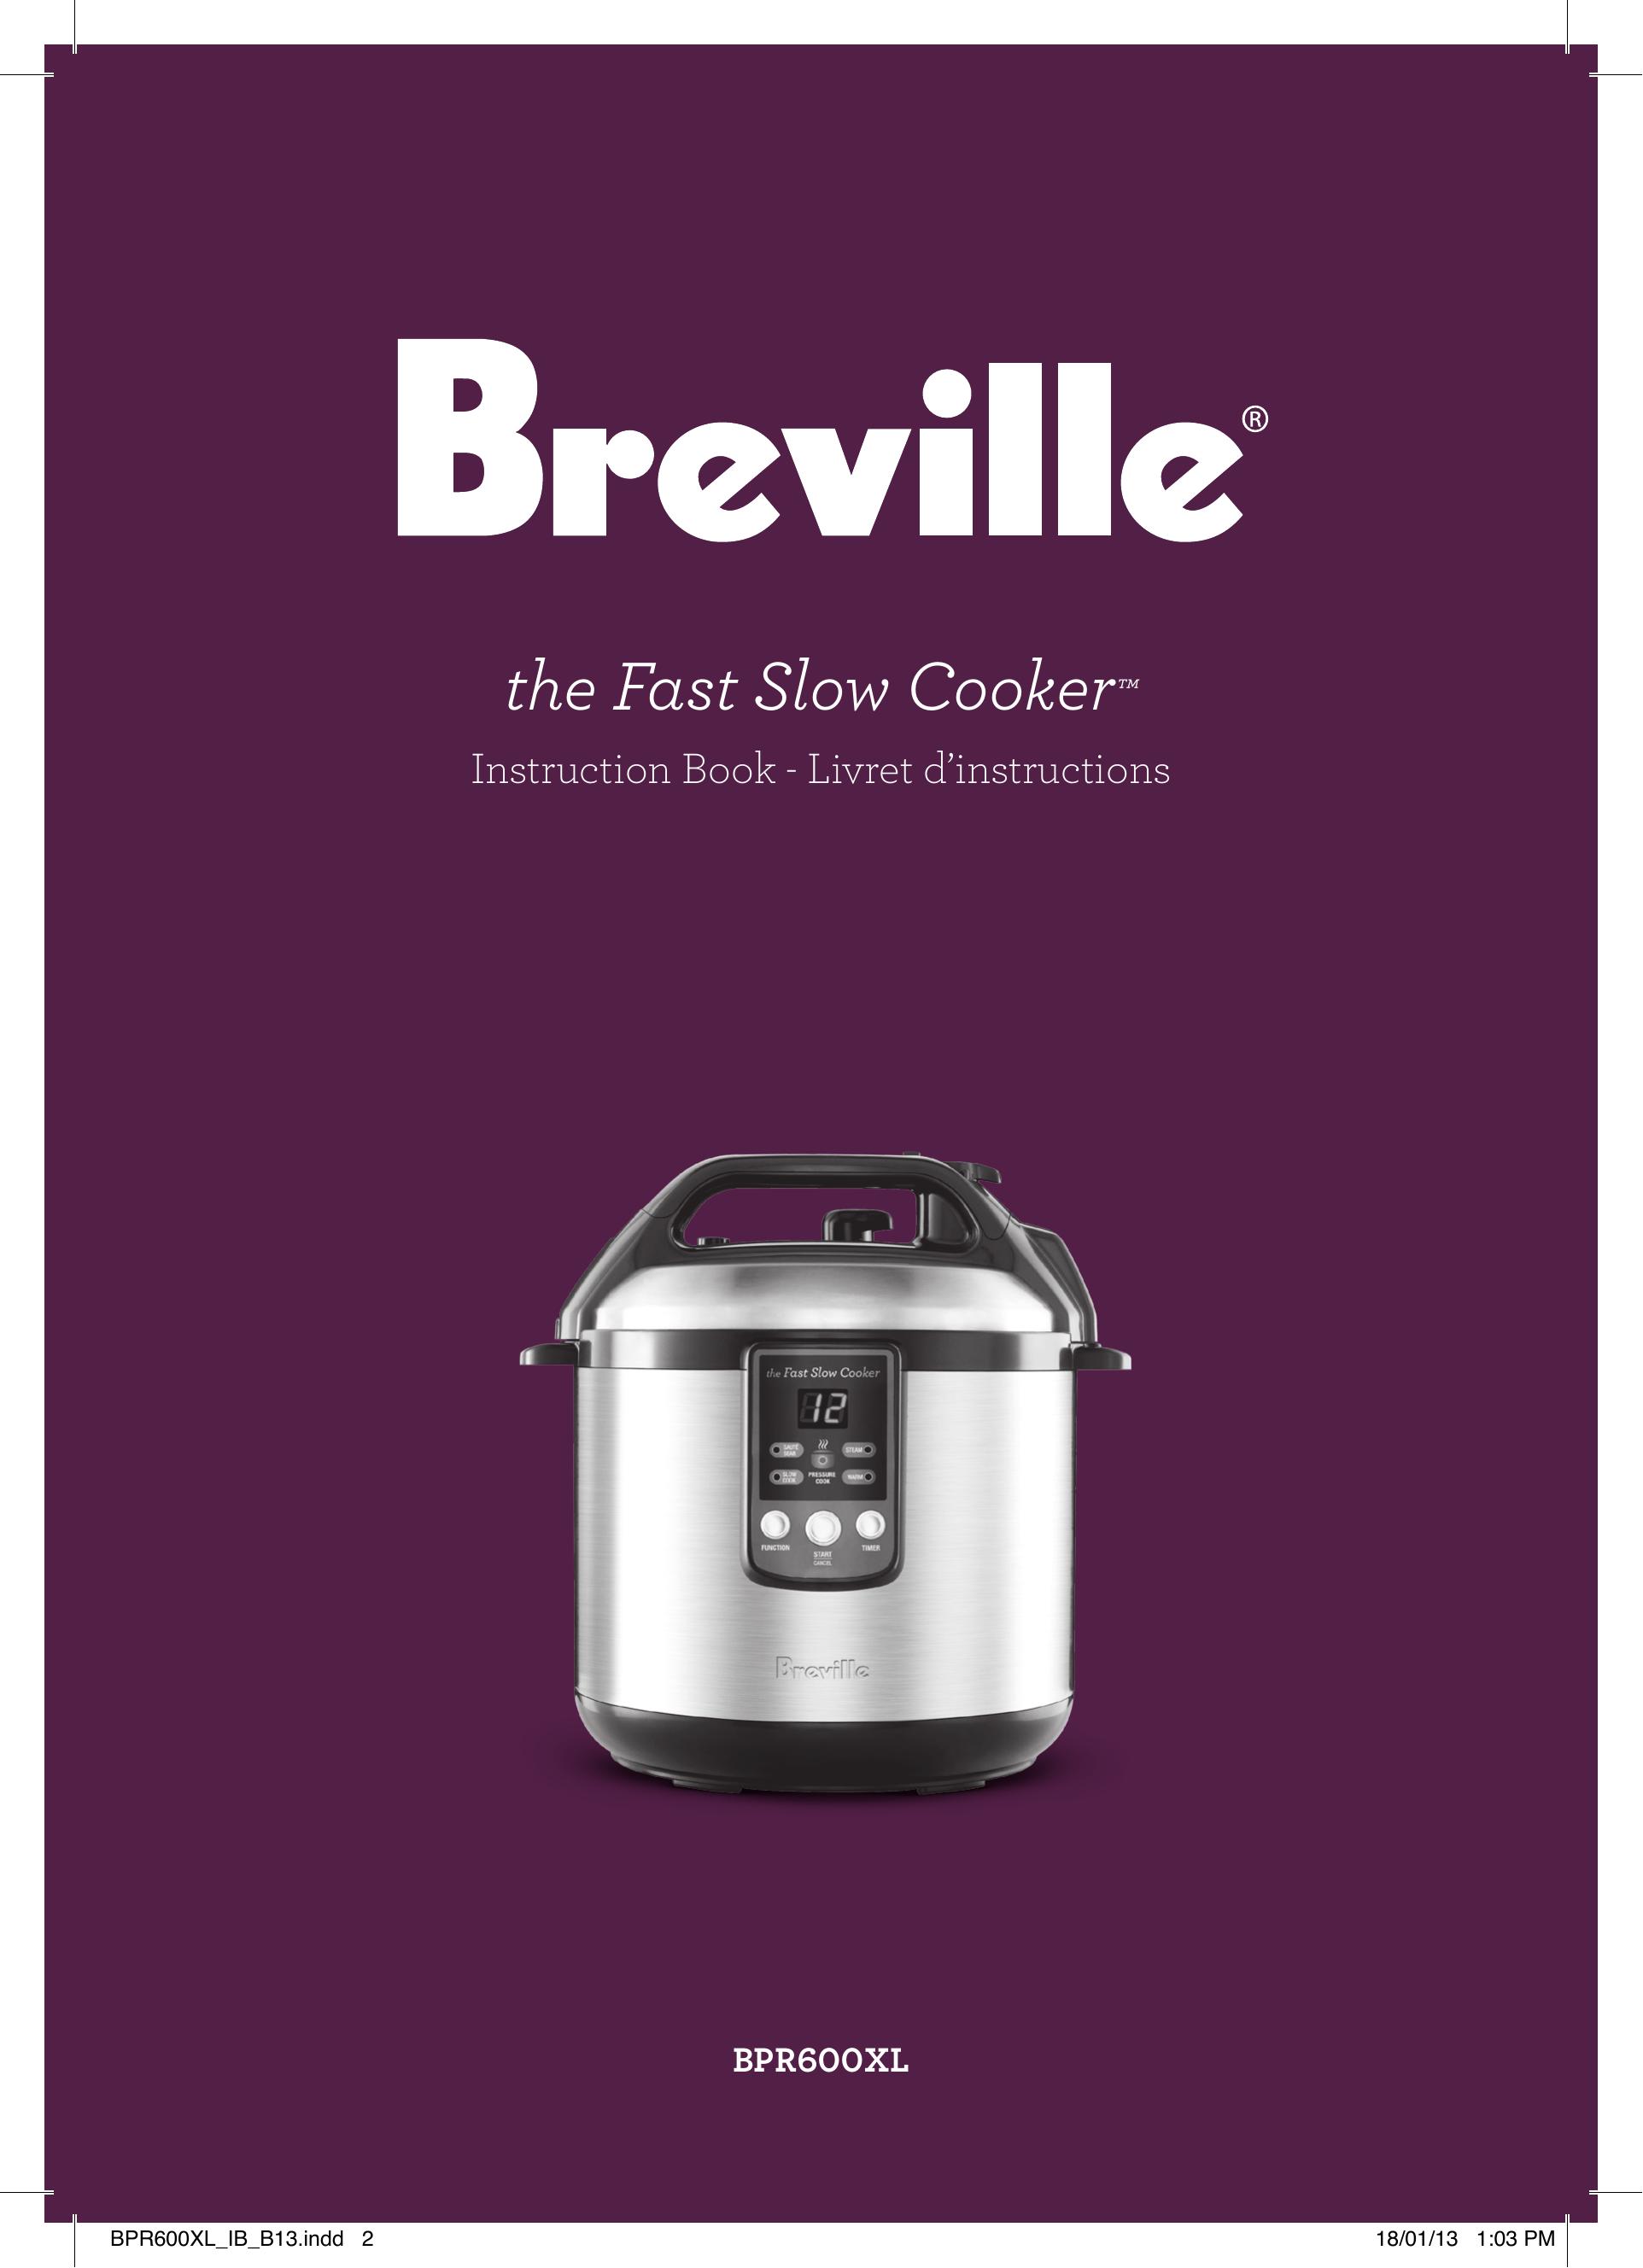 Breville BPR600XL Slow Cooker User Manual